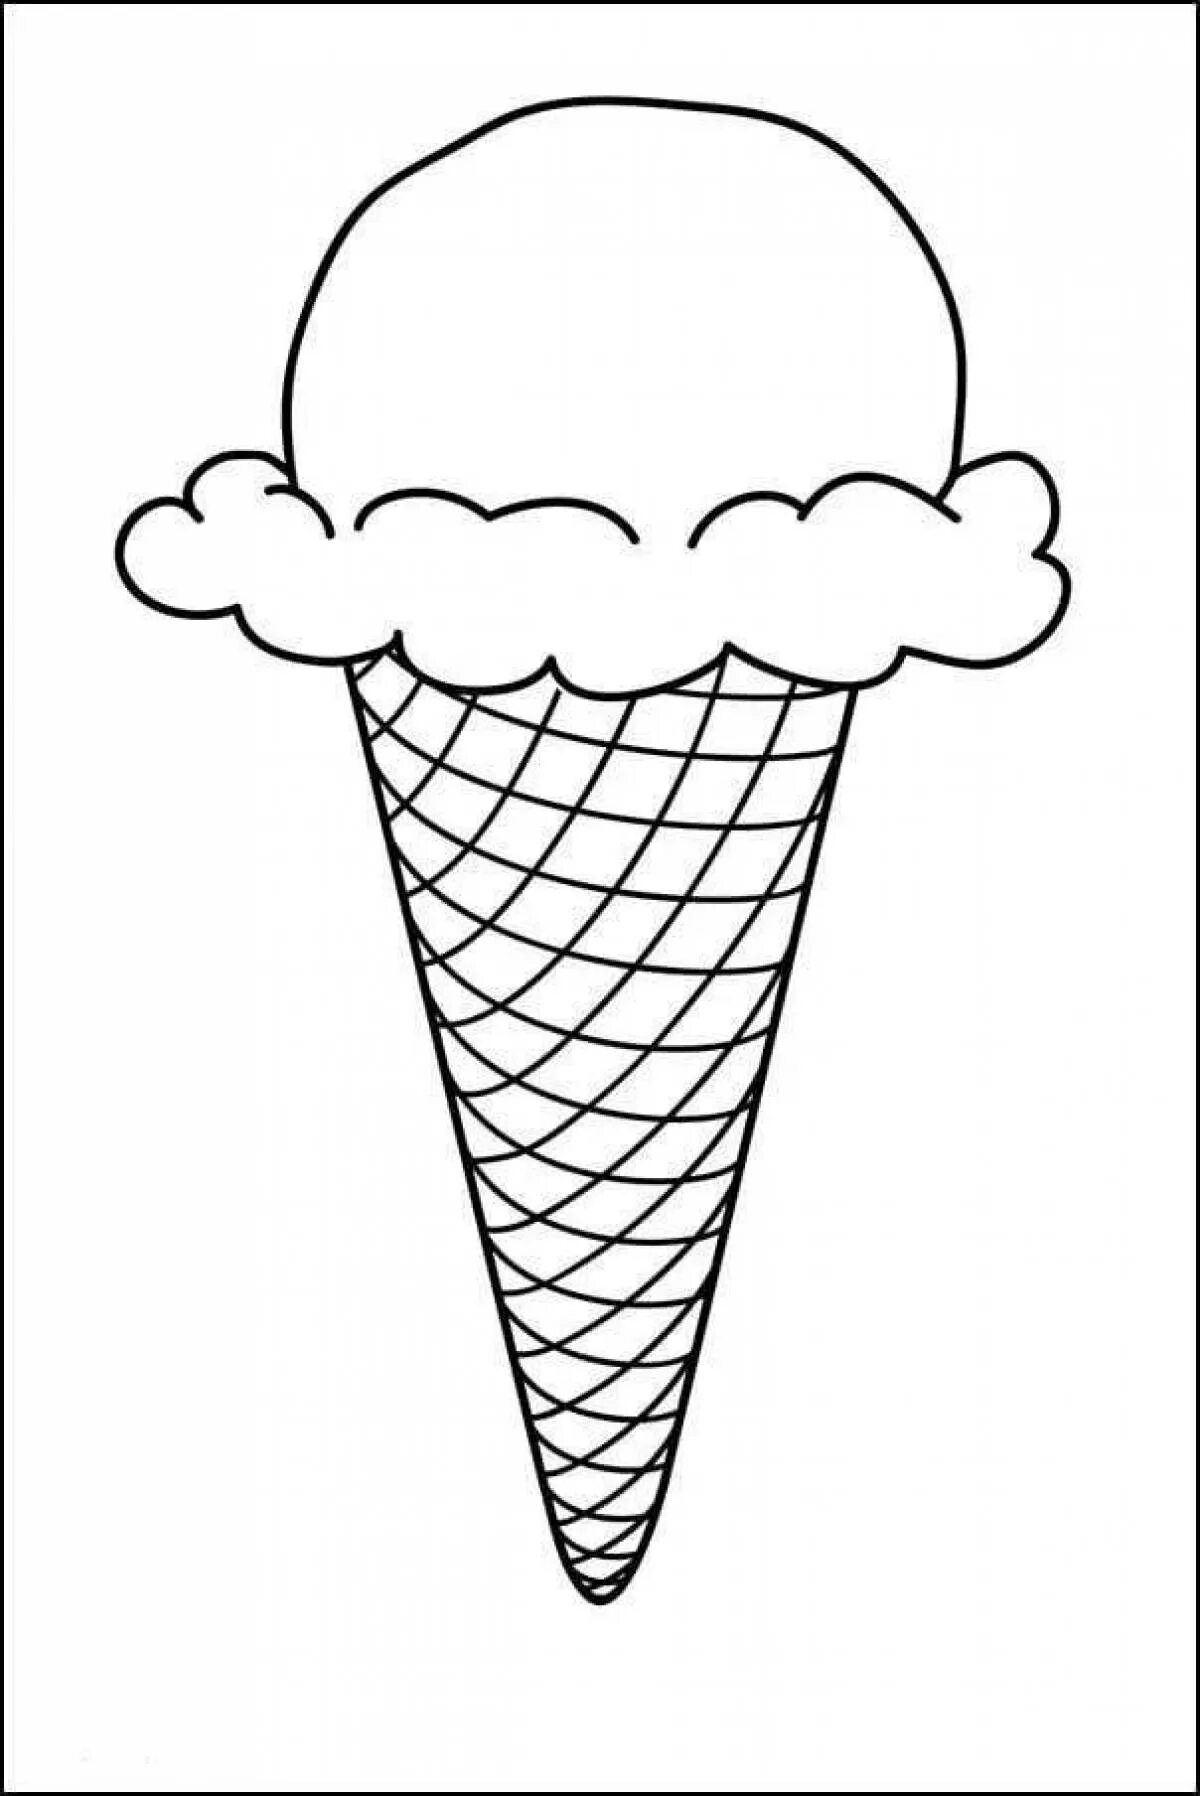 Раскраска мороженки. Раскраска мороженое. Мороженое раскраска для детей. Мороженое картинка для детей раскраска. Рожок мороженого трафарет.